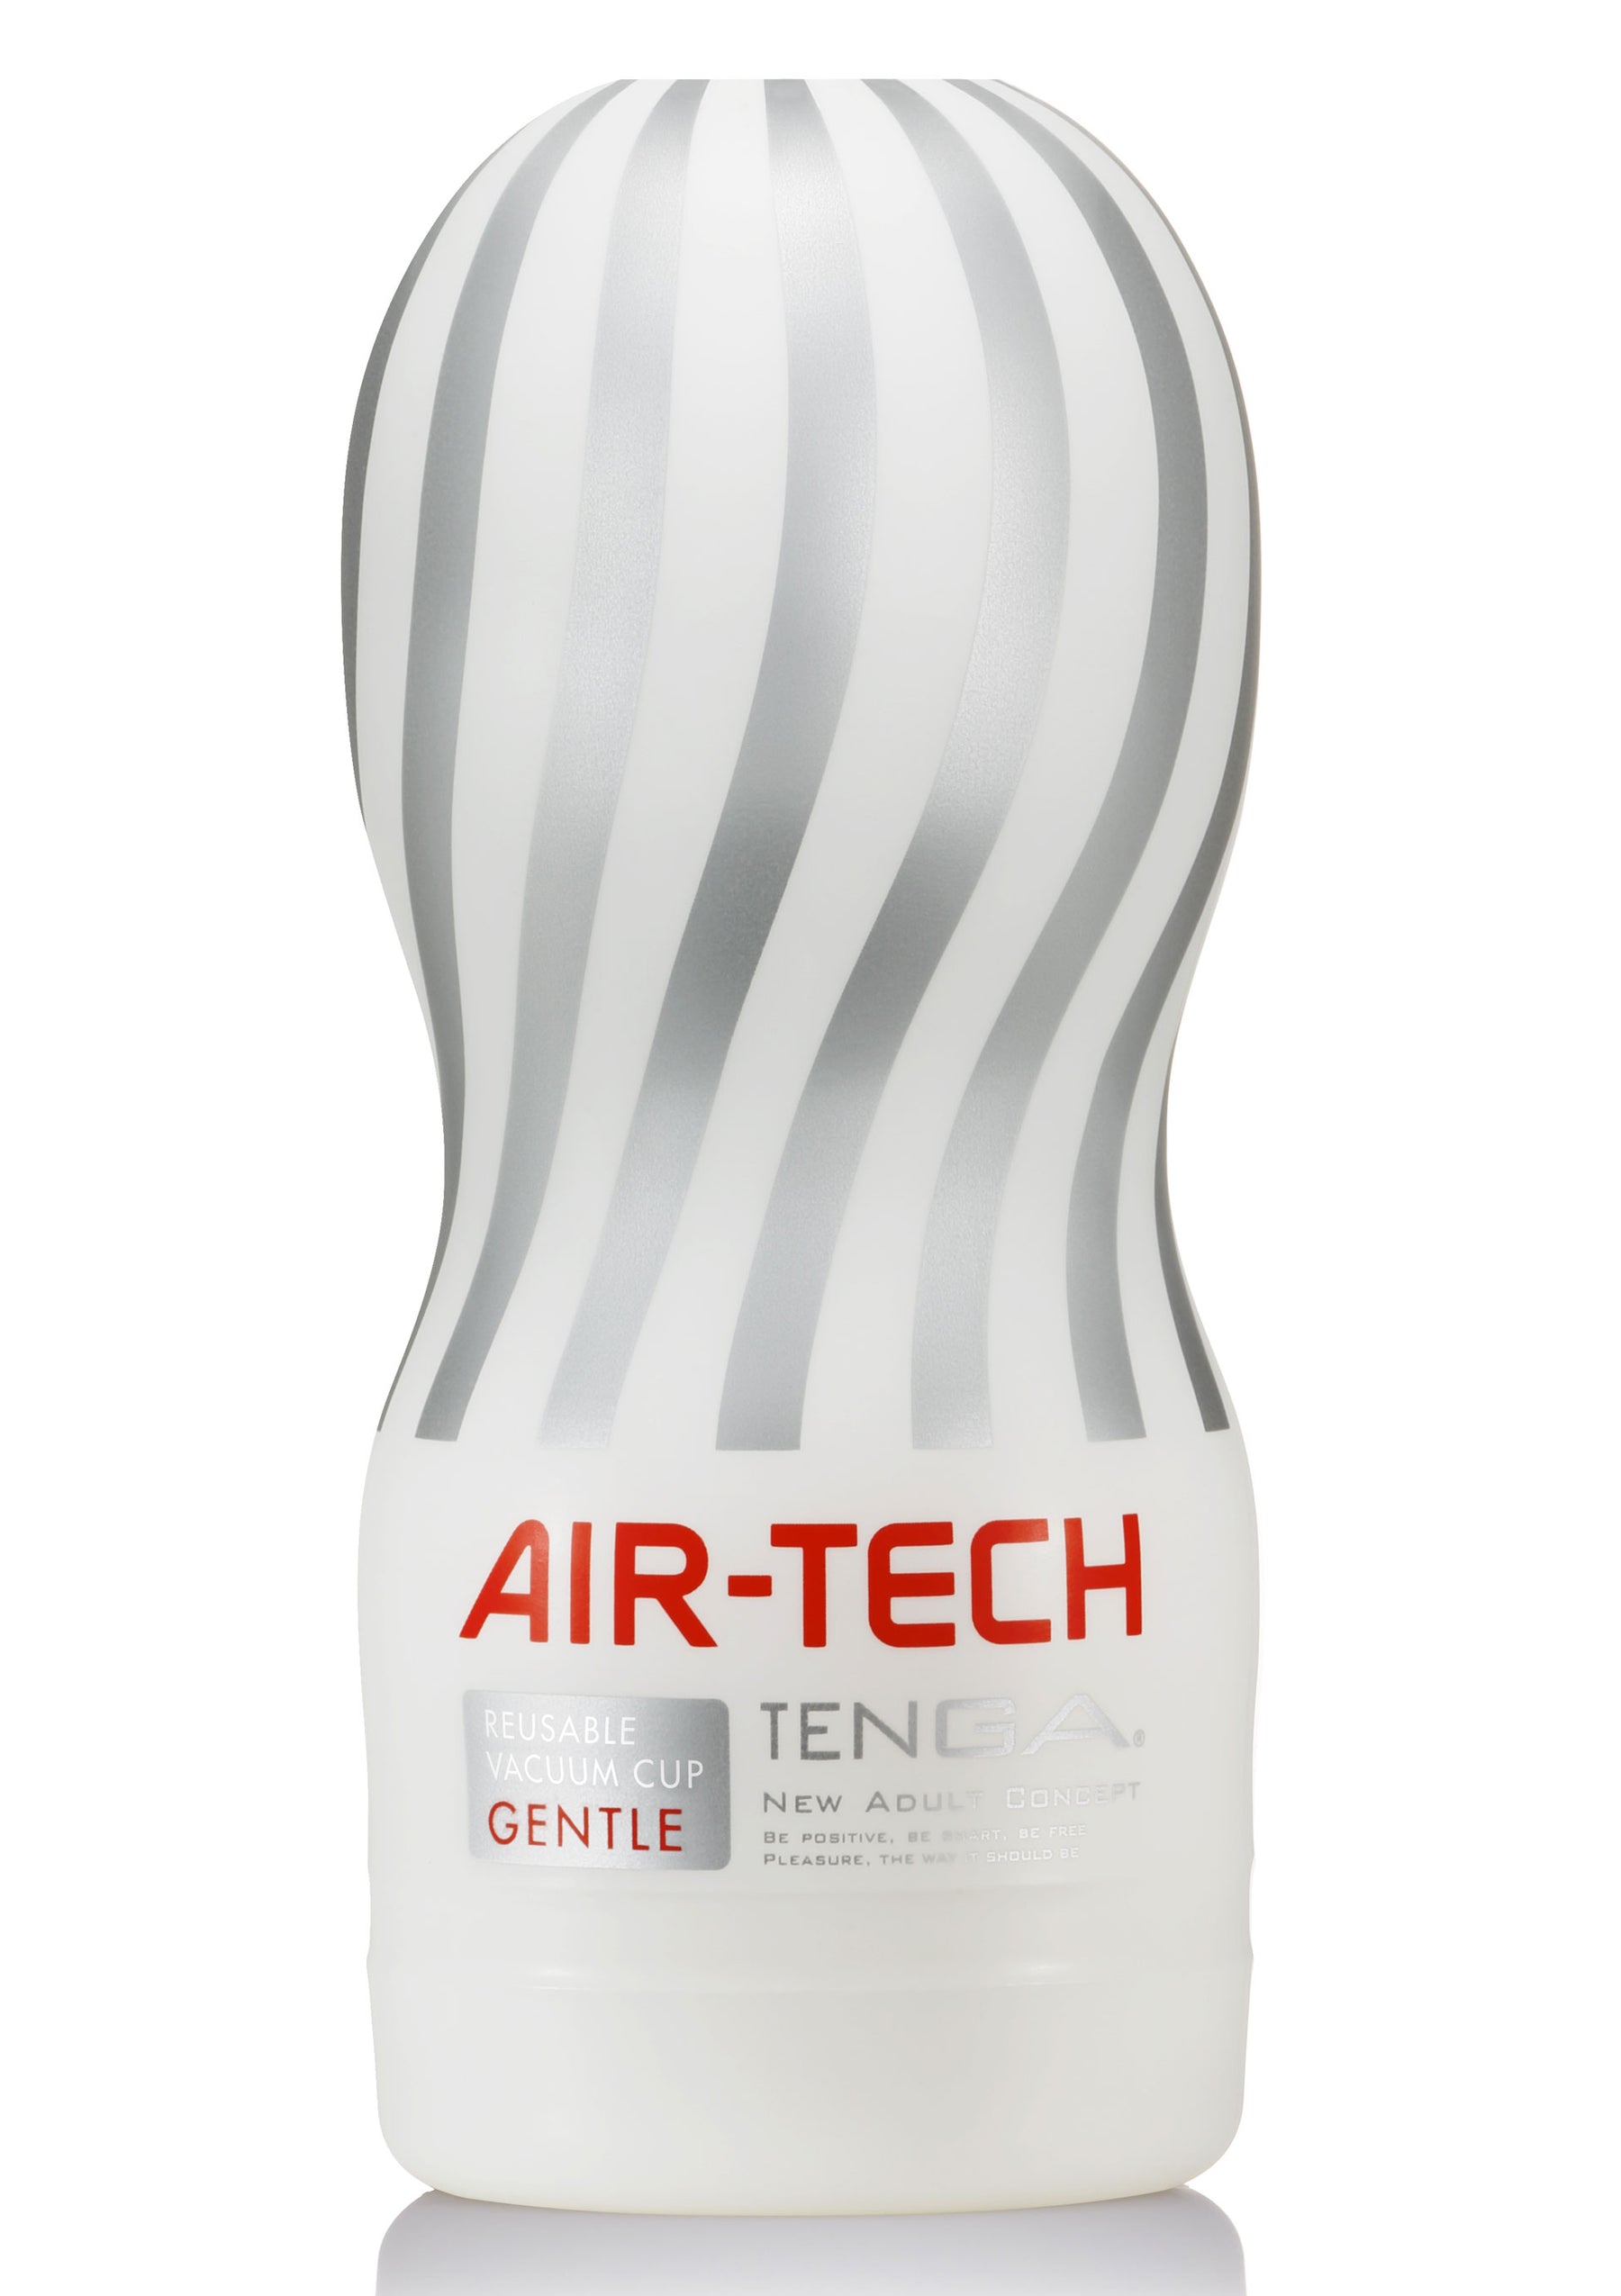 Tenga Air-Tech Cup Gentle